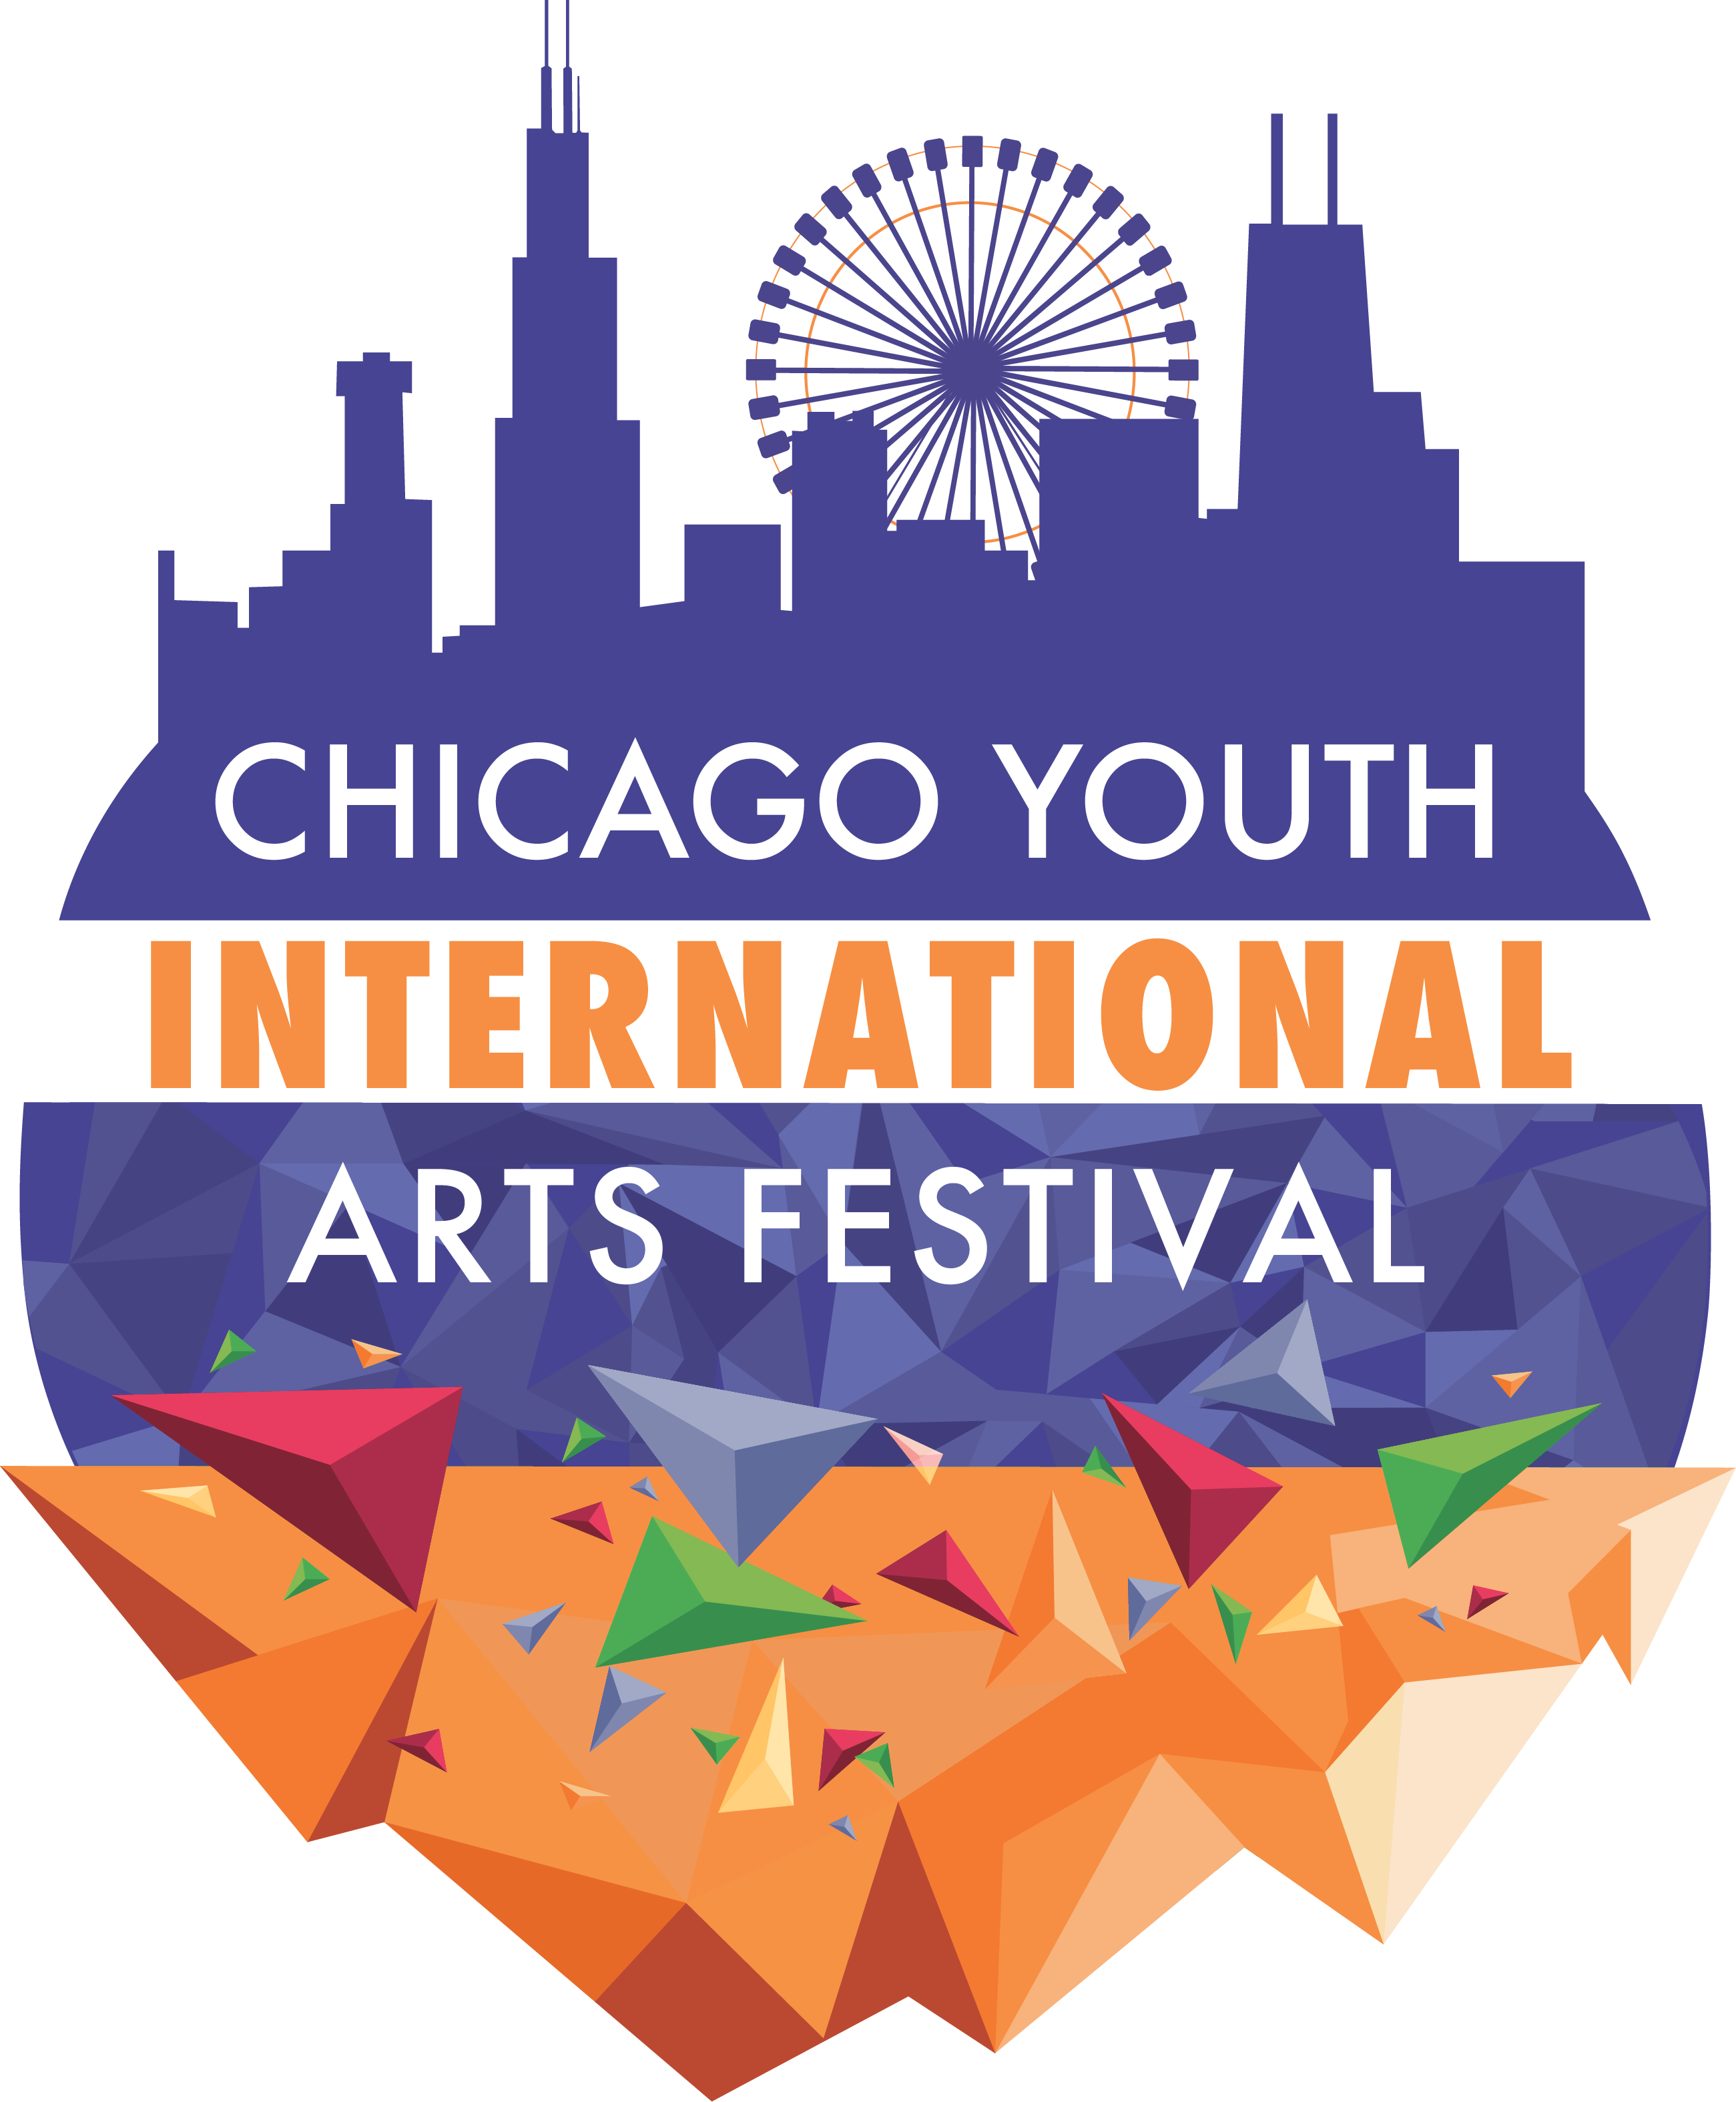 Chicago Youth International Arts Festival - Arts Festival (2601x3149)